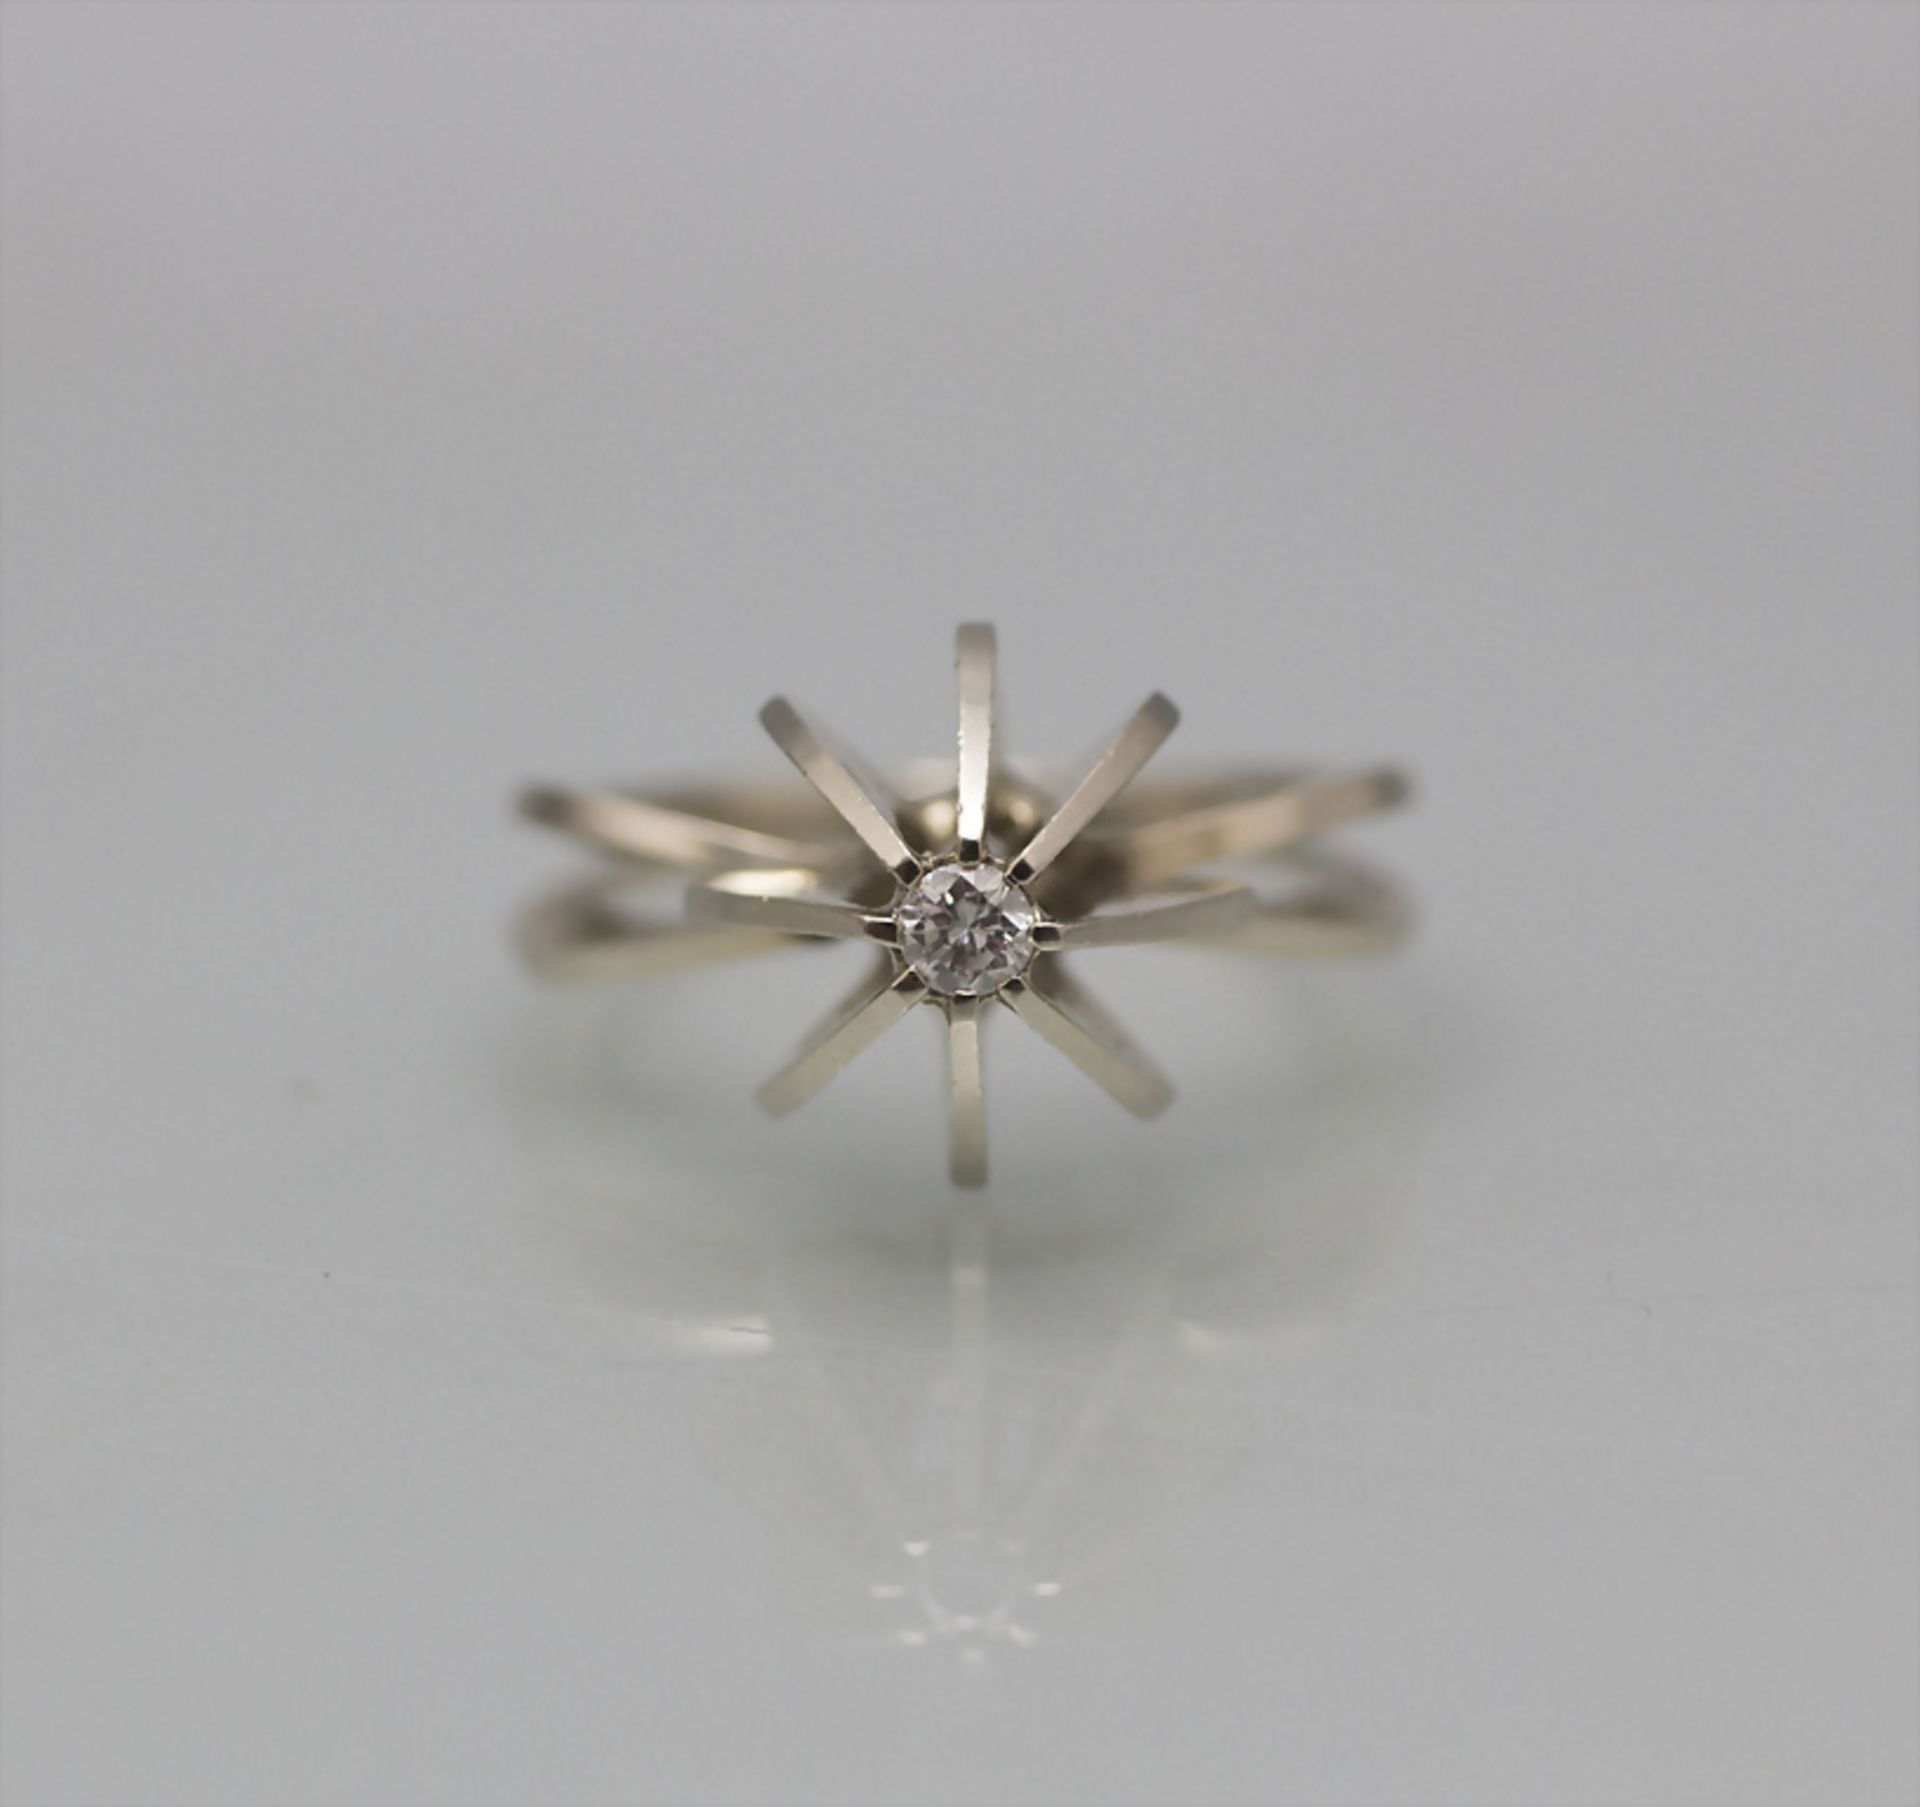 Damenring mit Brillant / A ladies 18 ct gold ring with diamond - Bild 3 aus 4